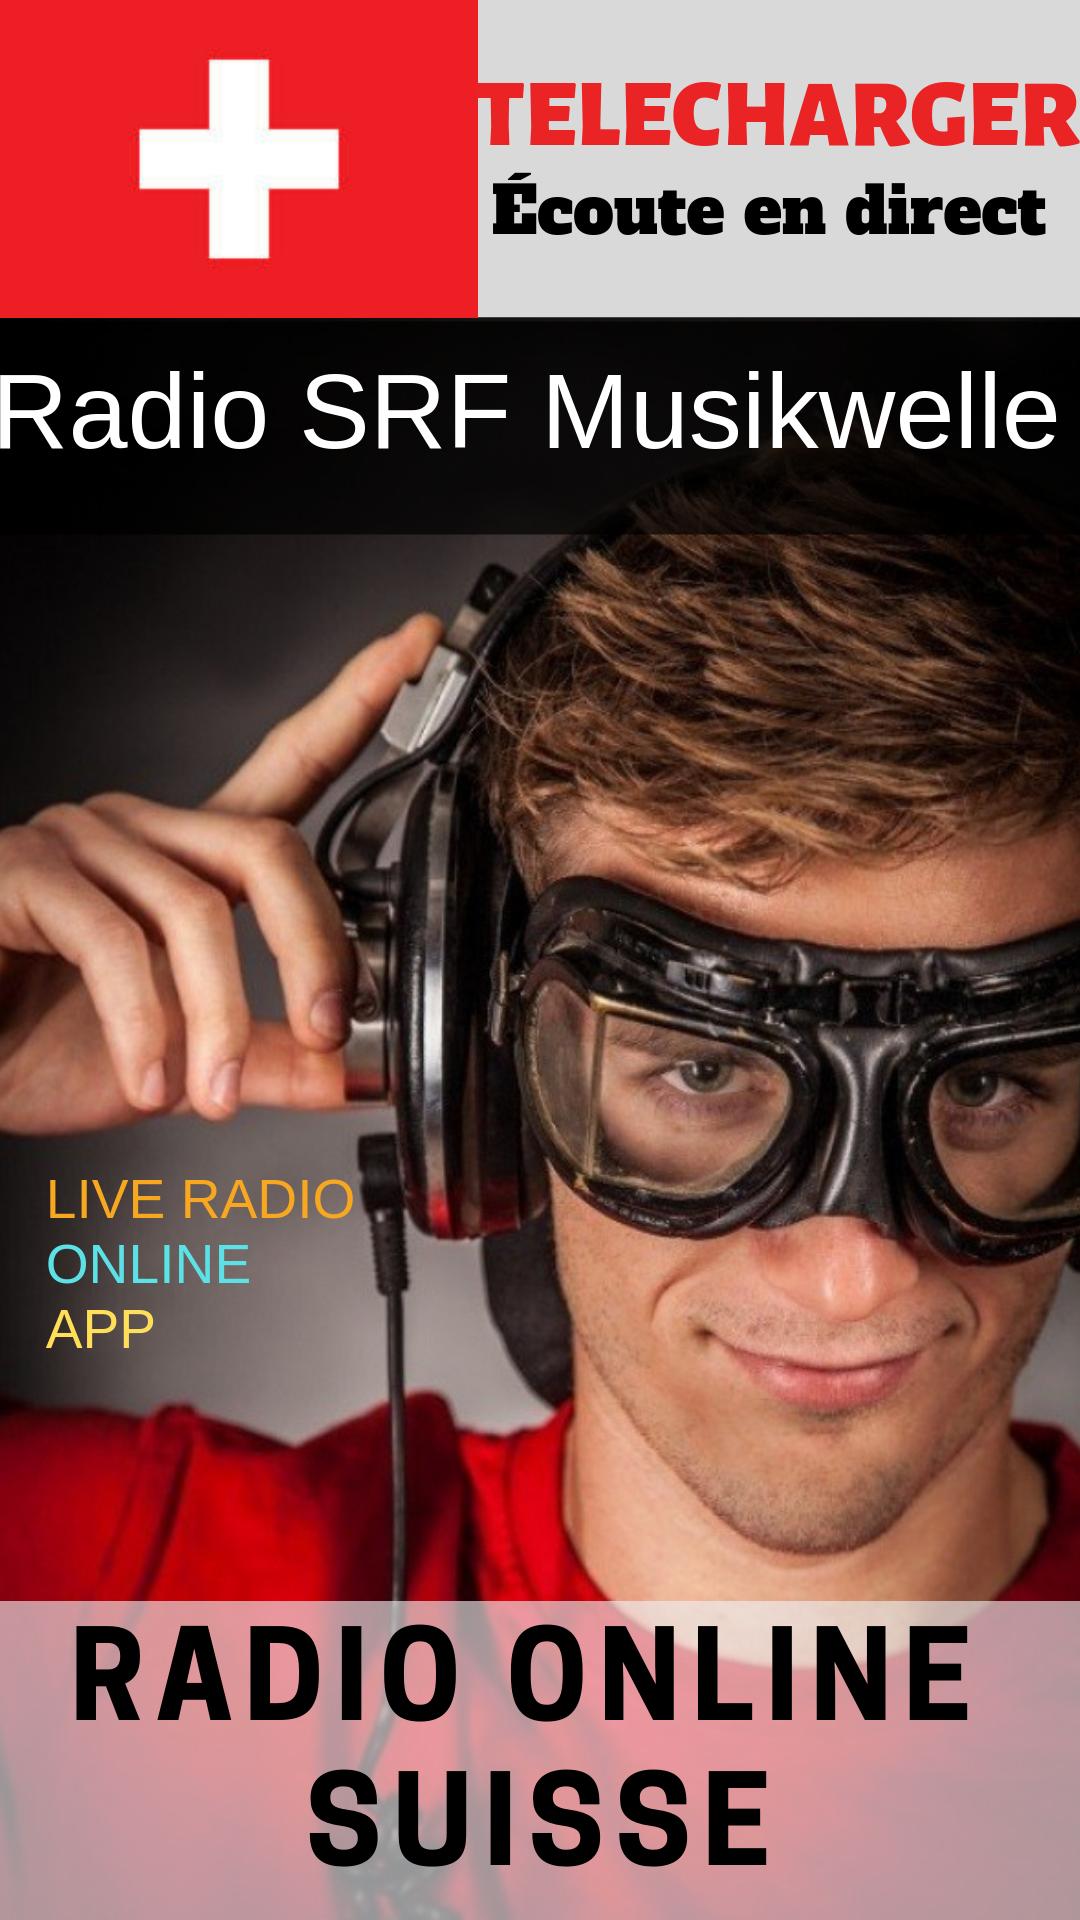 Radio SRF Musikwelle Gratuit en ligne for Android - APK Download